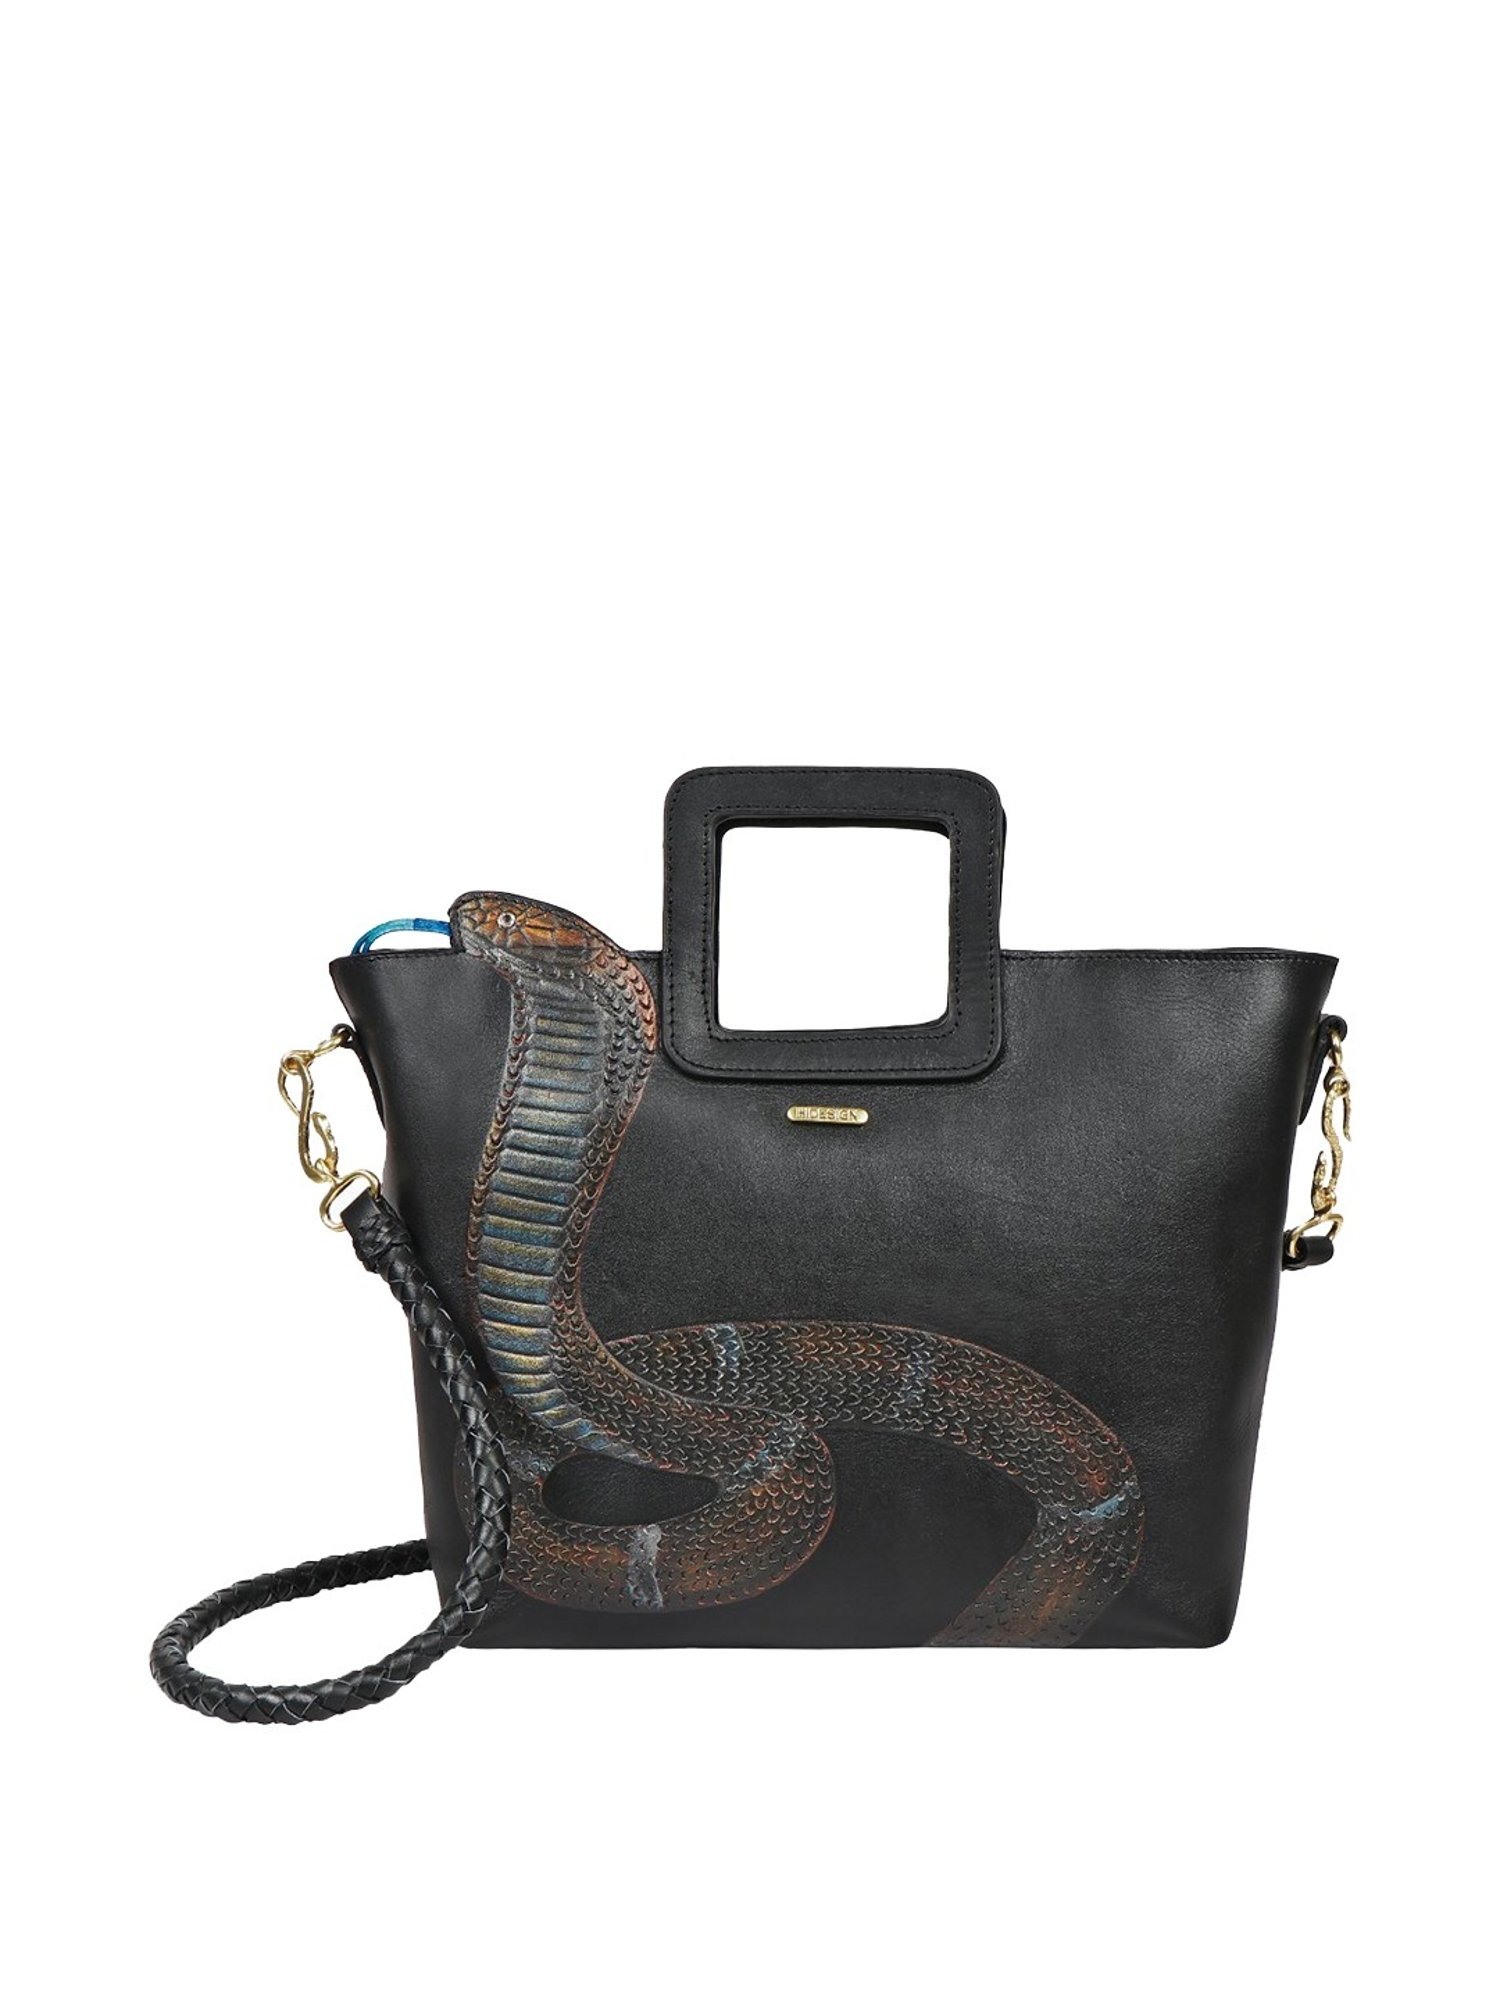 Buy Tan Watson 03 Tote Bag Online - Hidesign